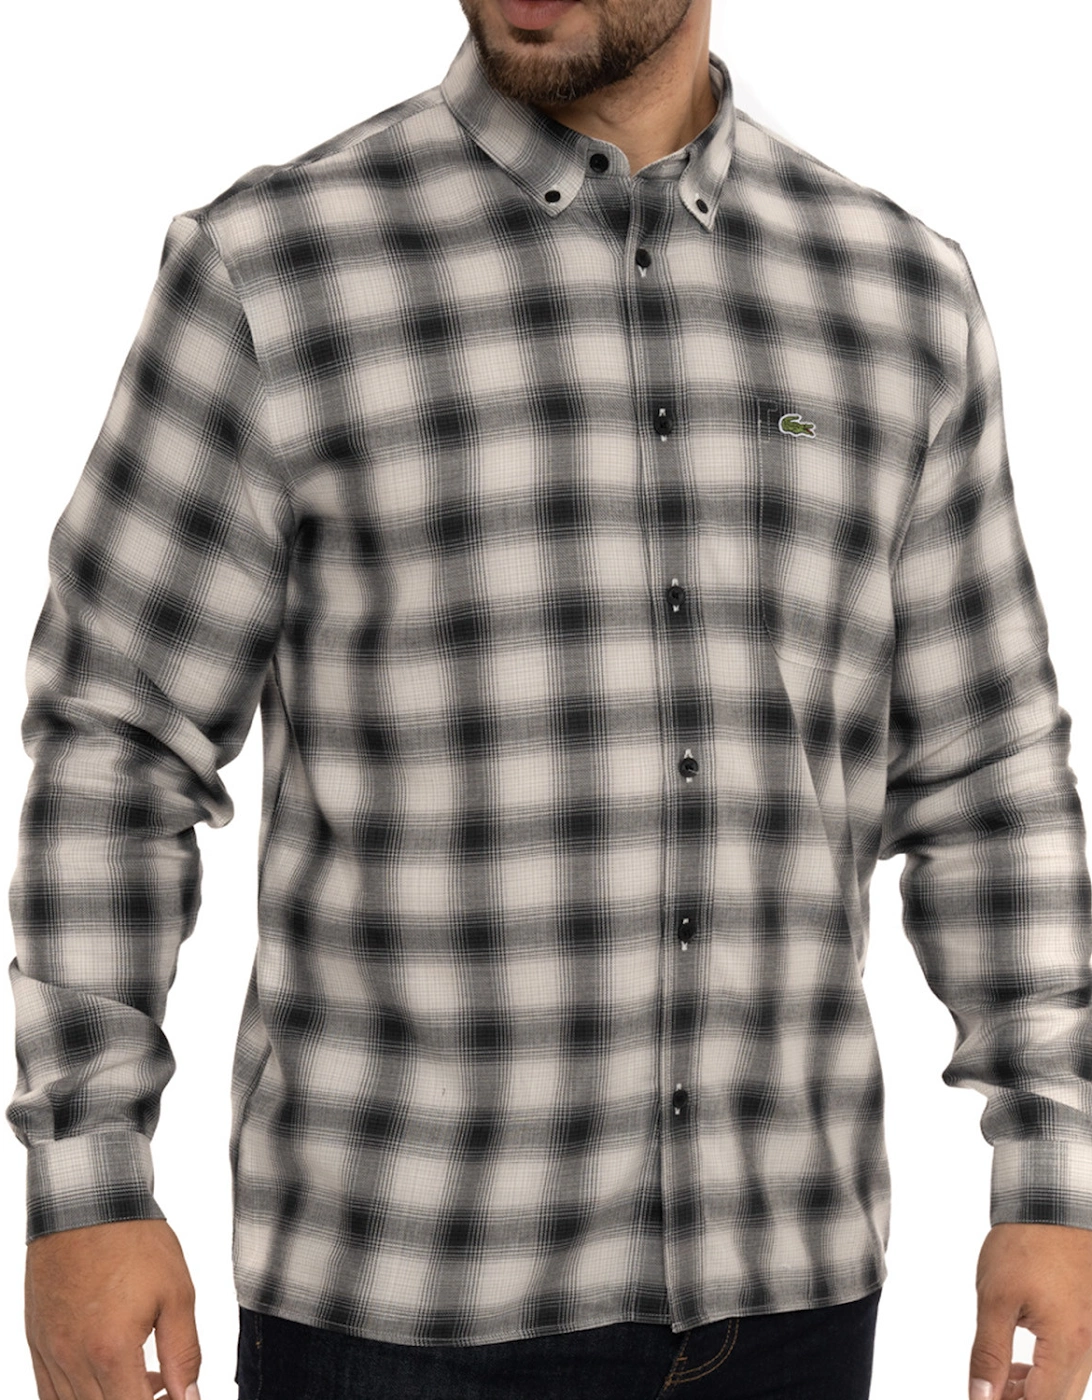 Mens Large Check Pattern Shirt (Grey/Black)